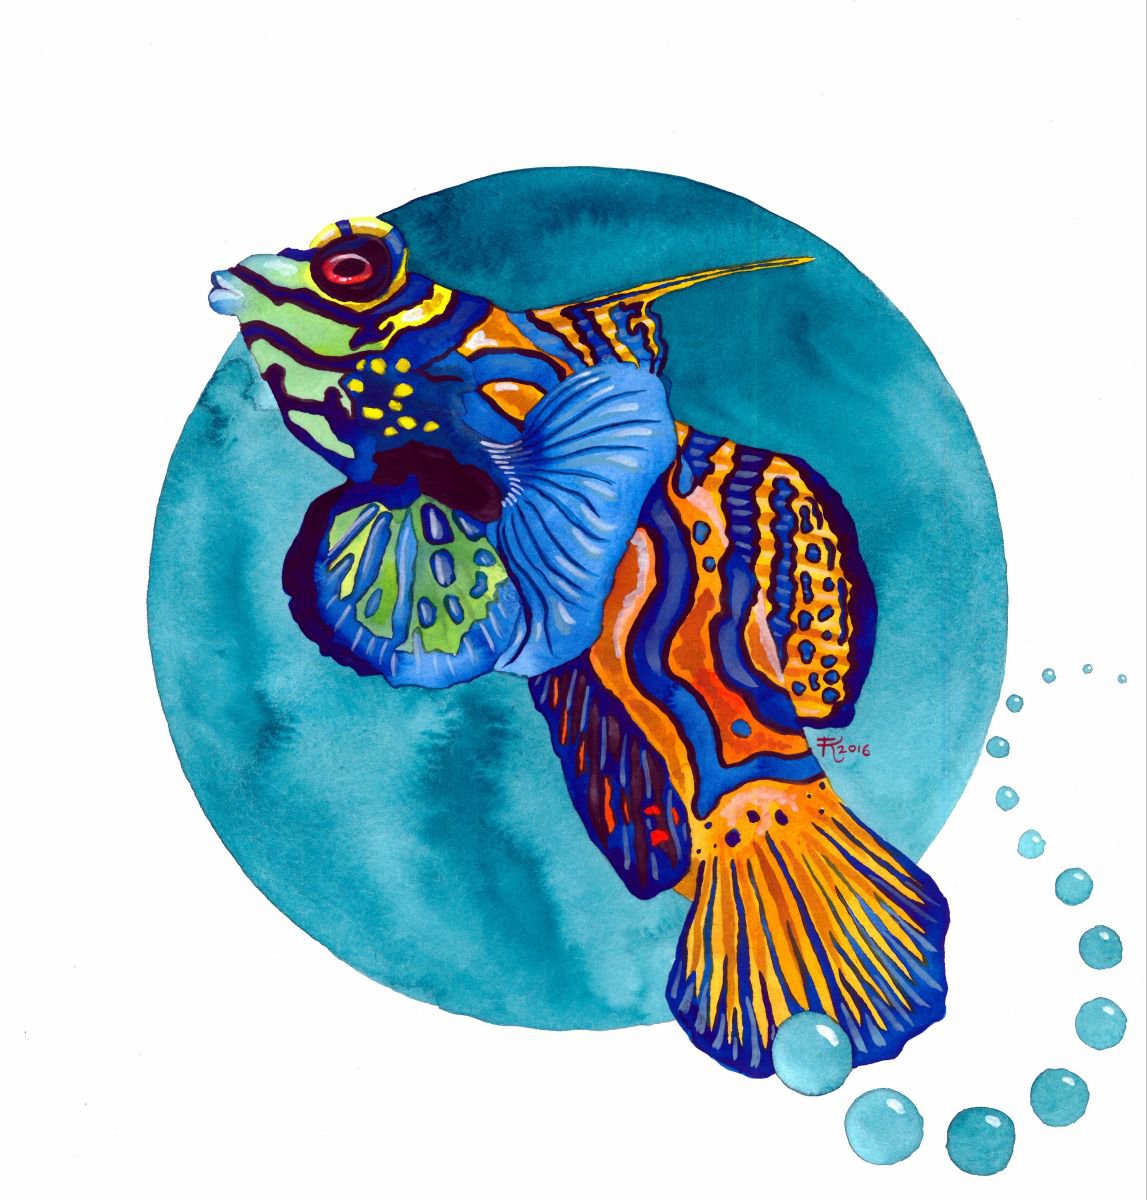 Mandarin Fish with Bubbles by Terri Kelleher